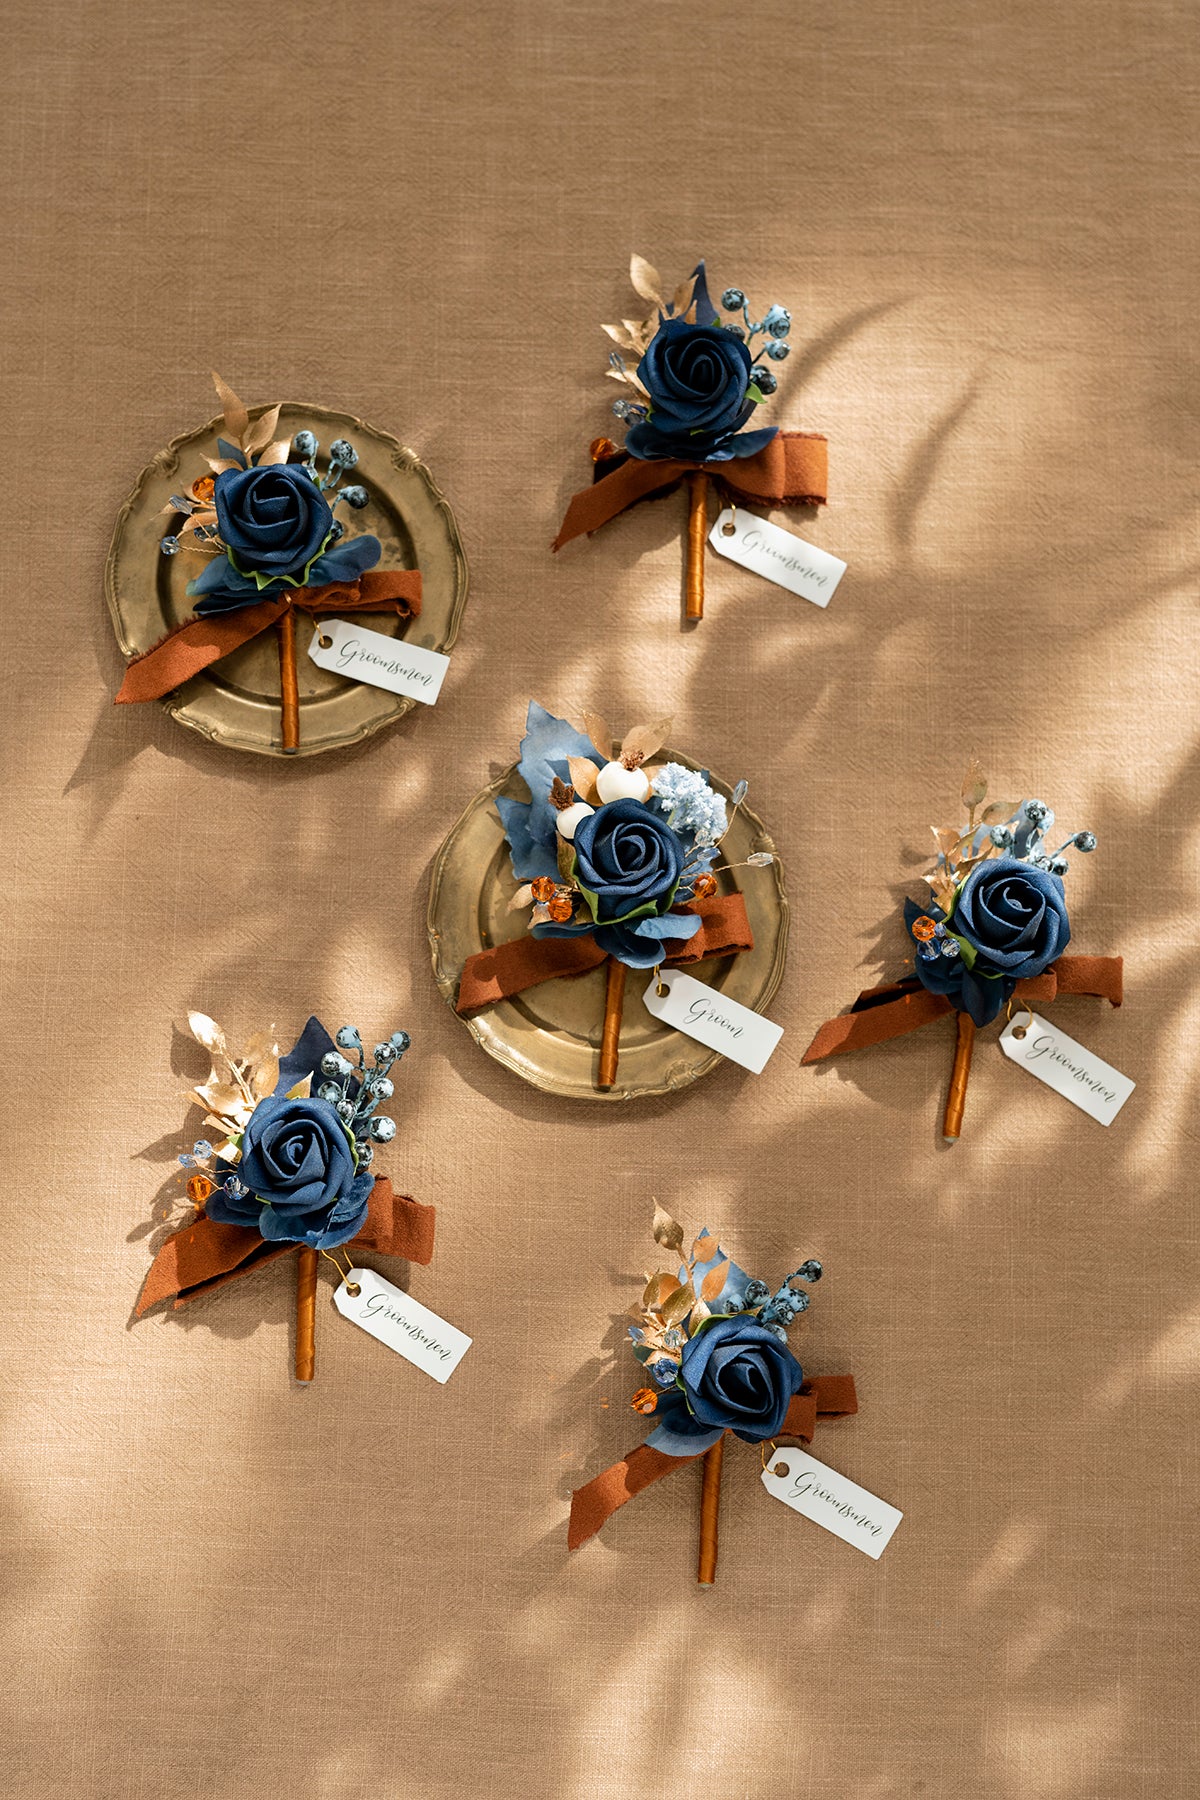 Additional Flower Decorations in Russet Orange & Denim Blue